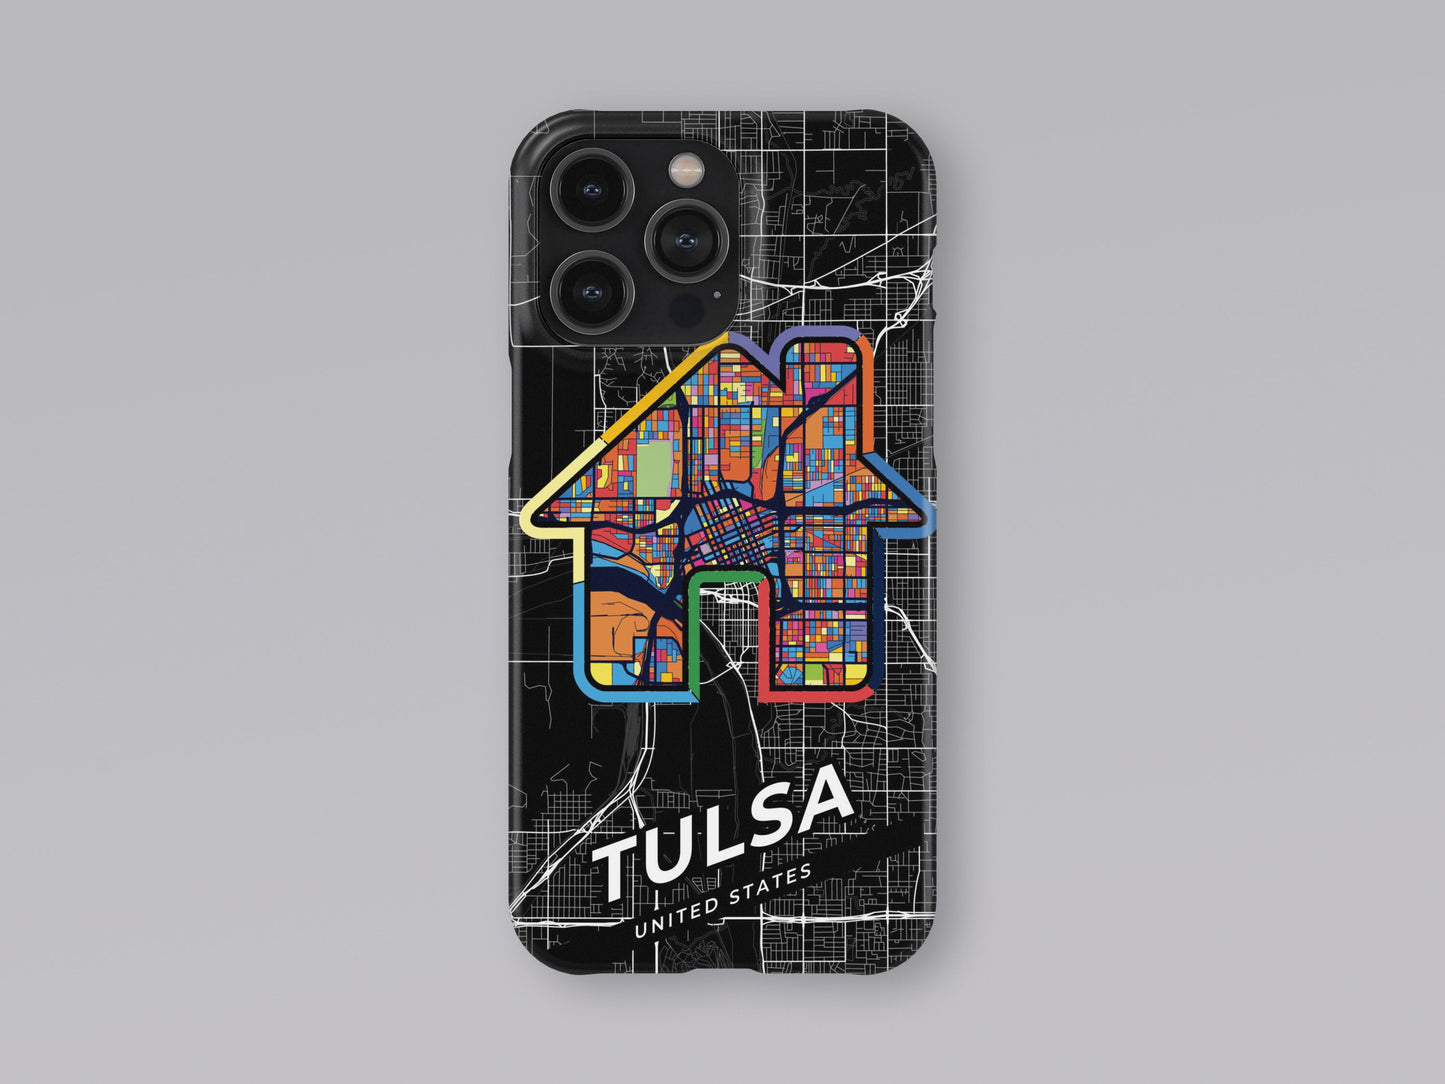 Tulsa Oklahoma slim phone case with colorful icon 3